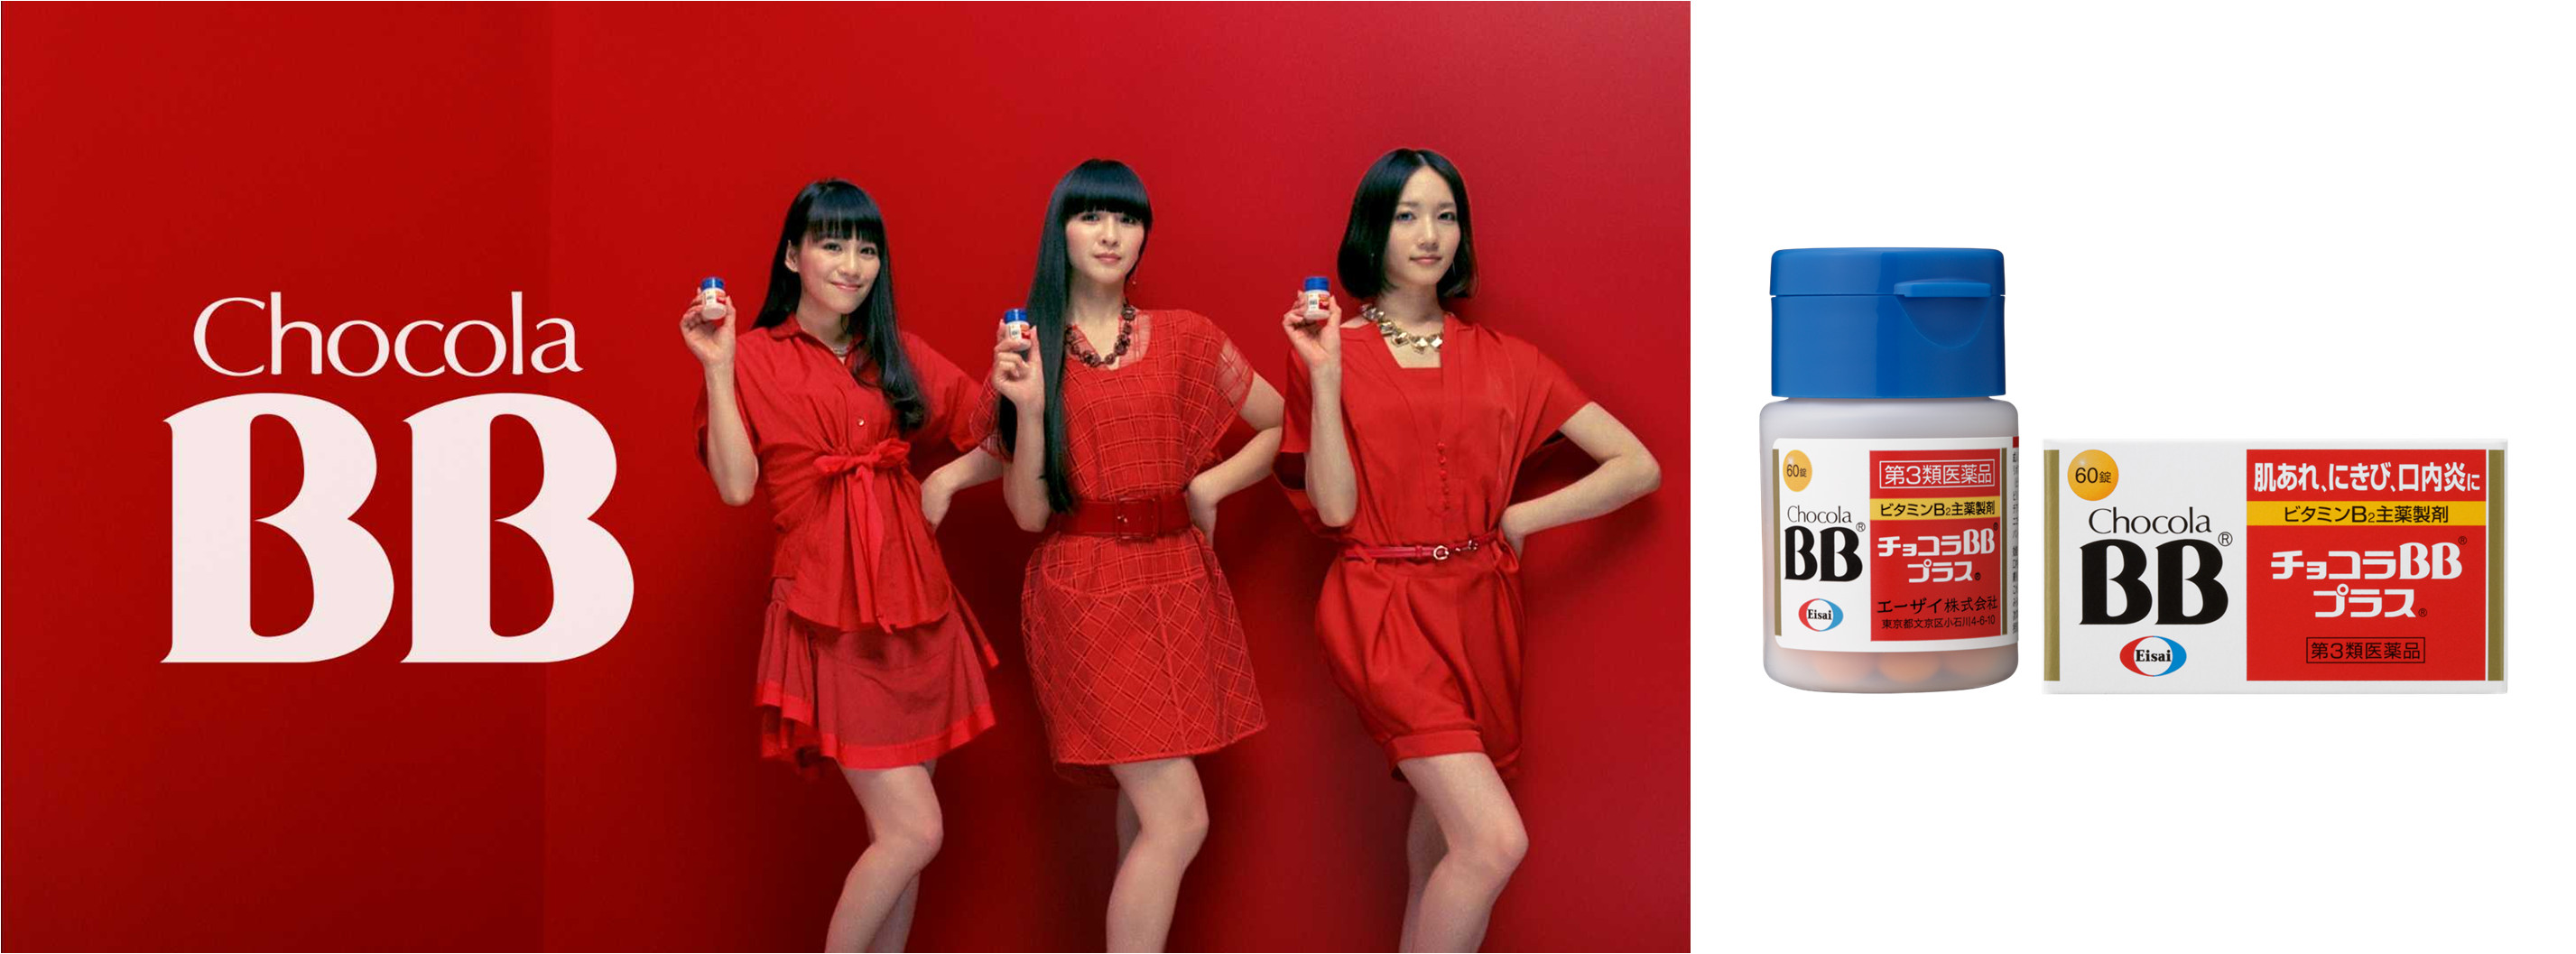 Perfume出演 2014年度第２弾ｔｖｃｍ チョコラbb プラス お肌に自信 篇７月25日 金 から放映開始 エーザイ株式会社 コンシューマーｈｈｃ事業部のプレスリリース